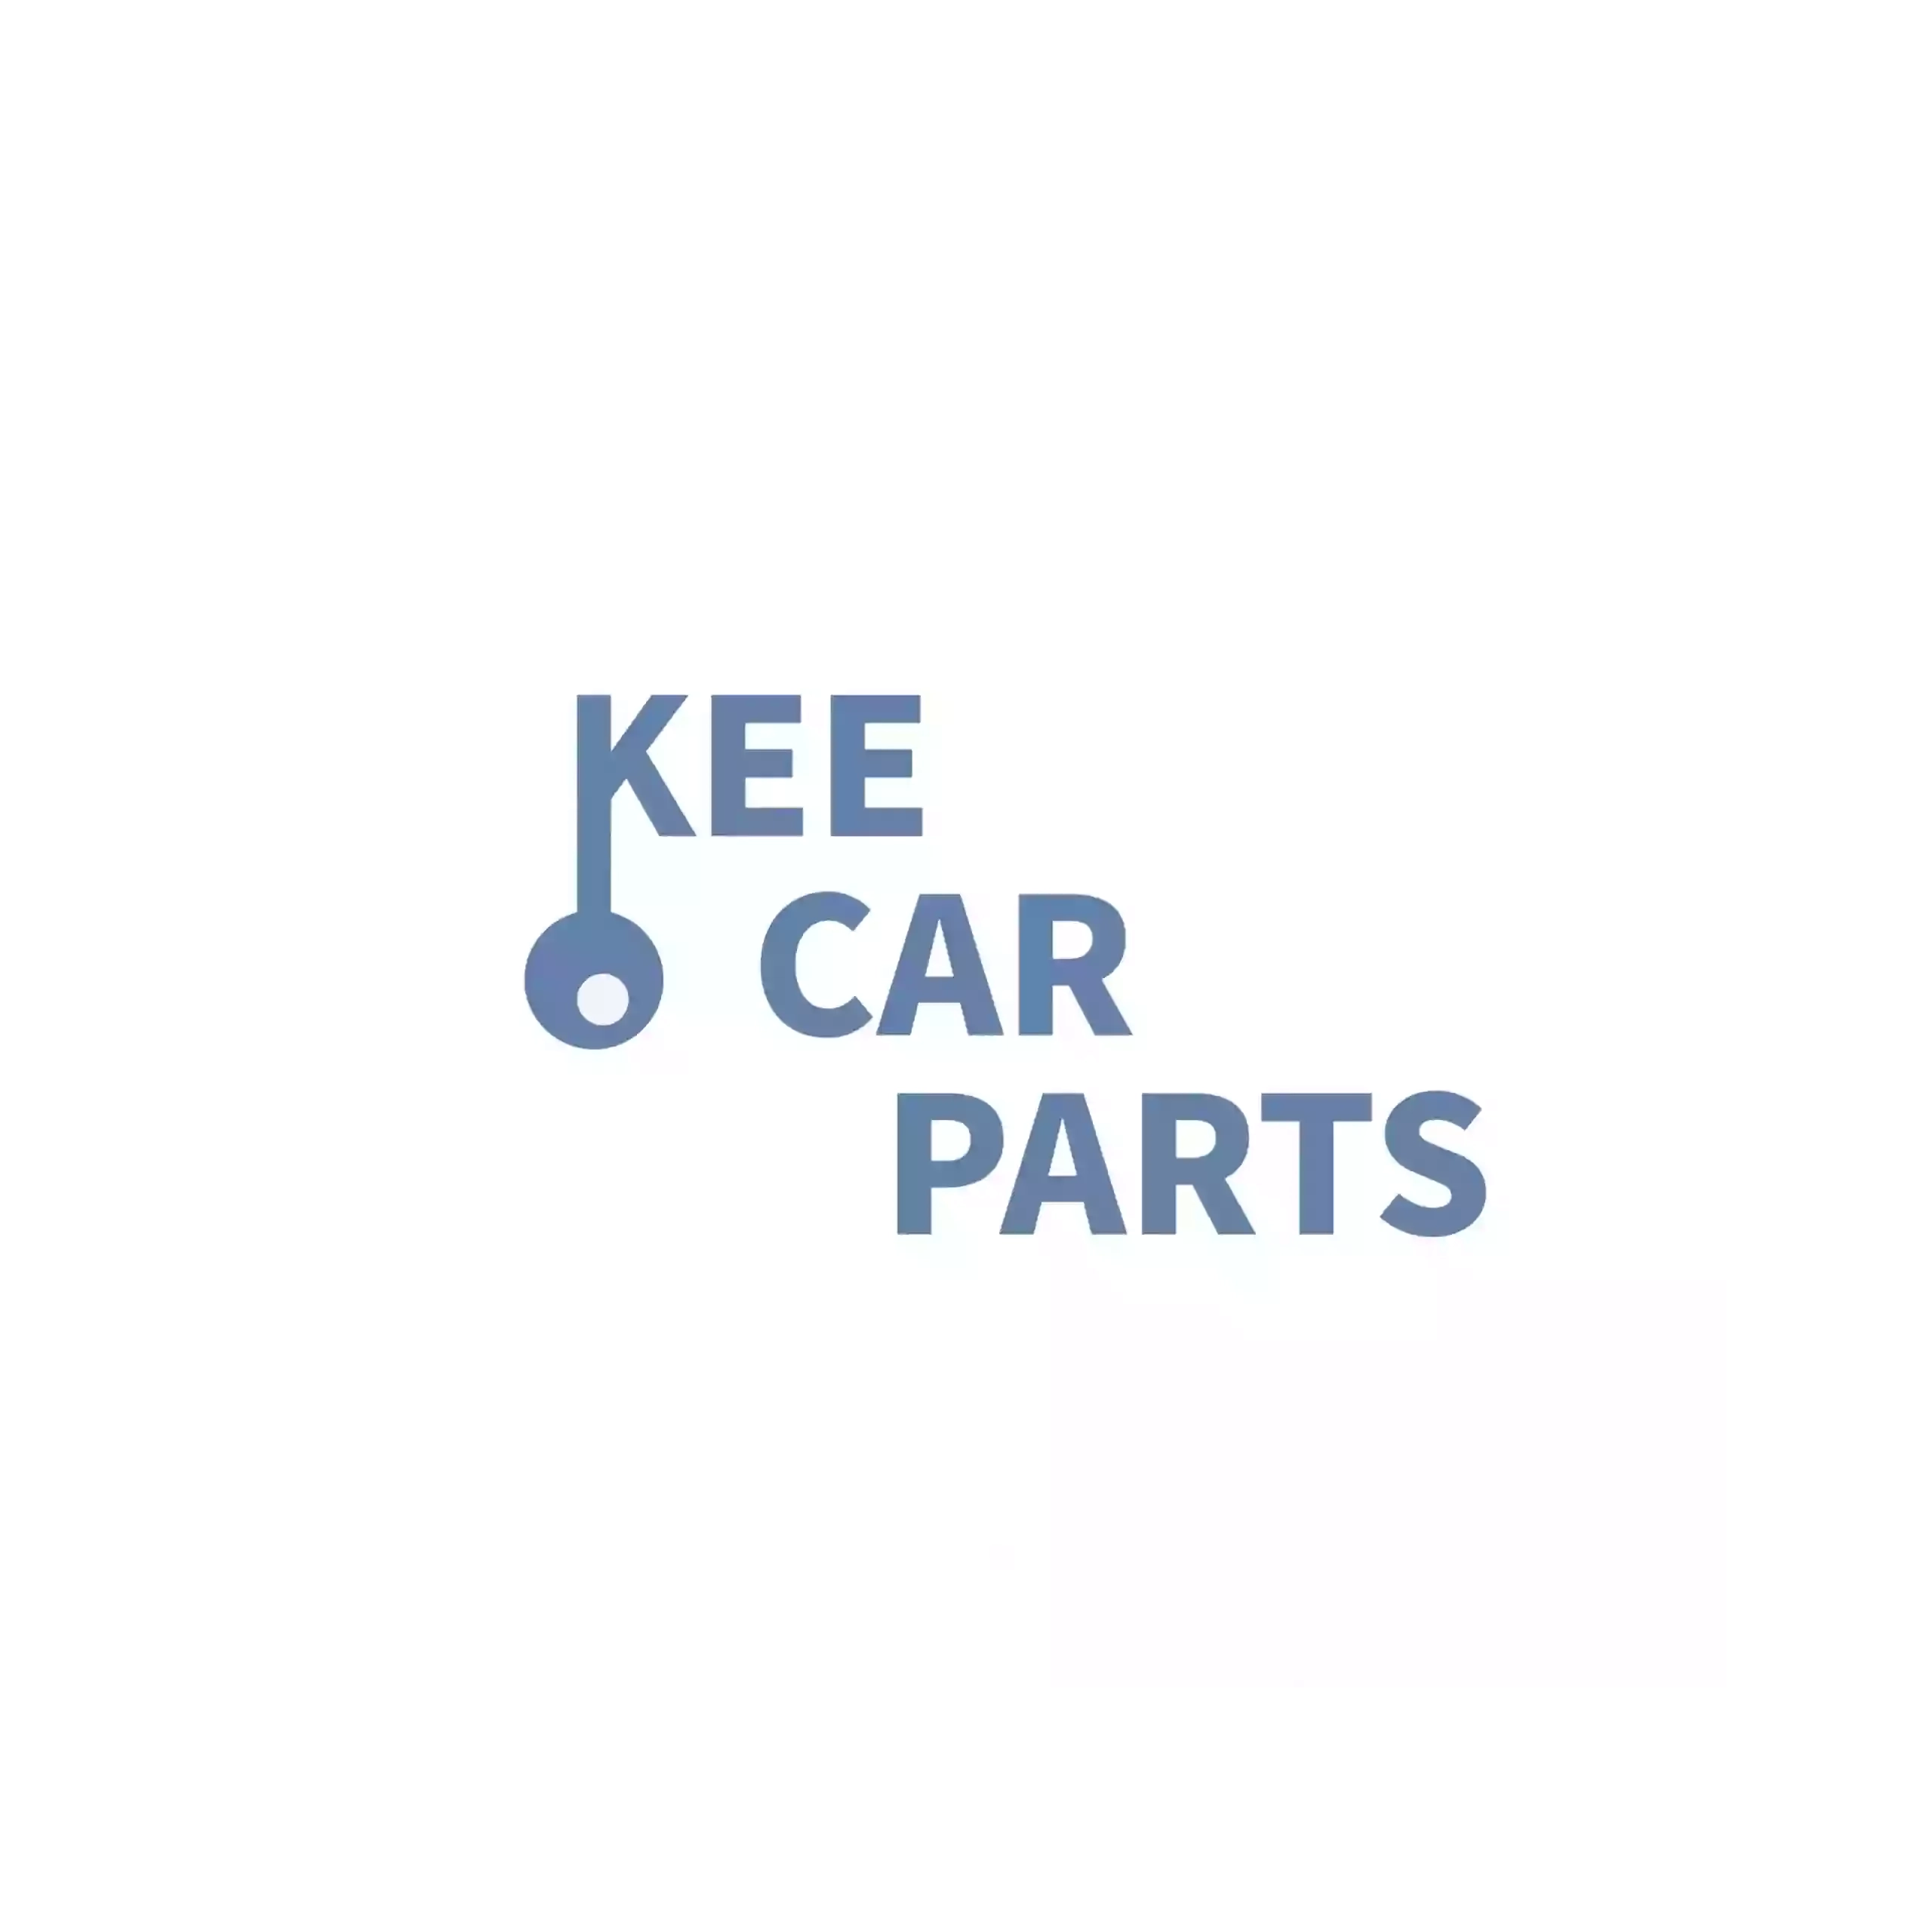 Kee Car Parts